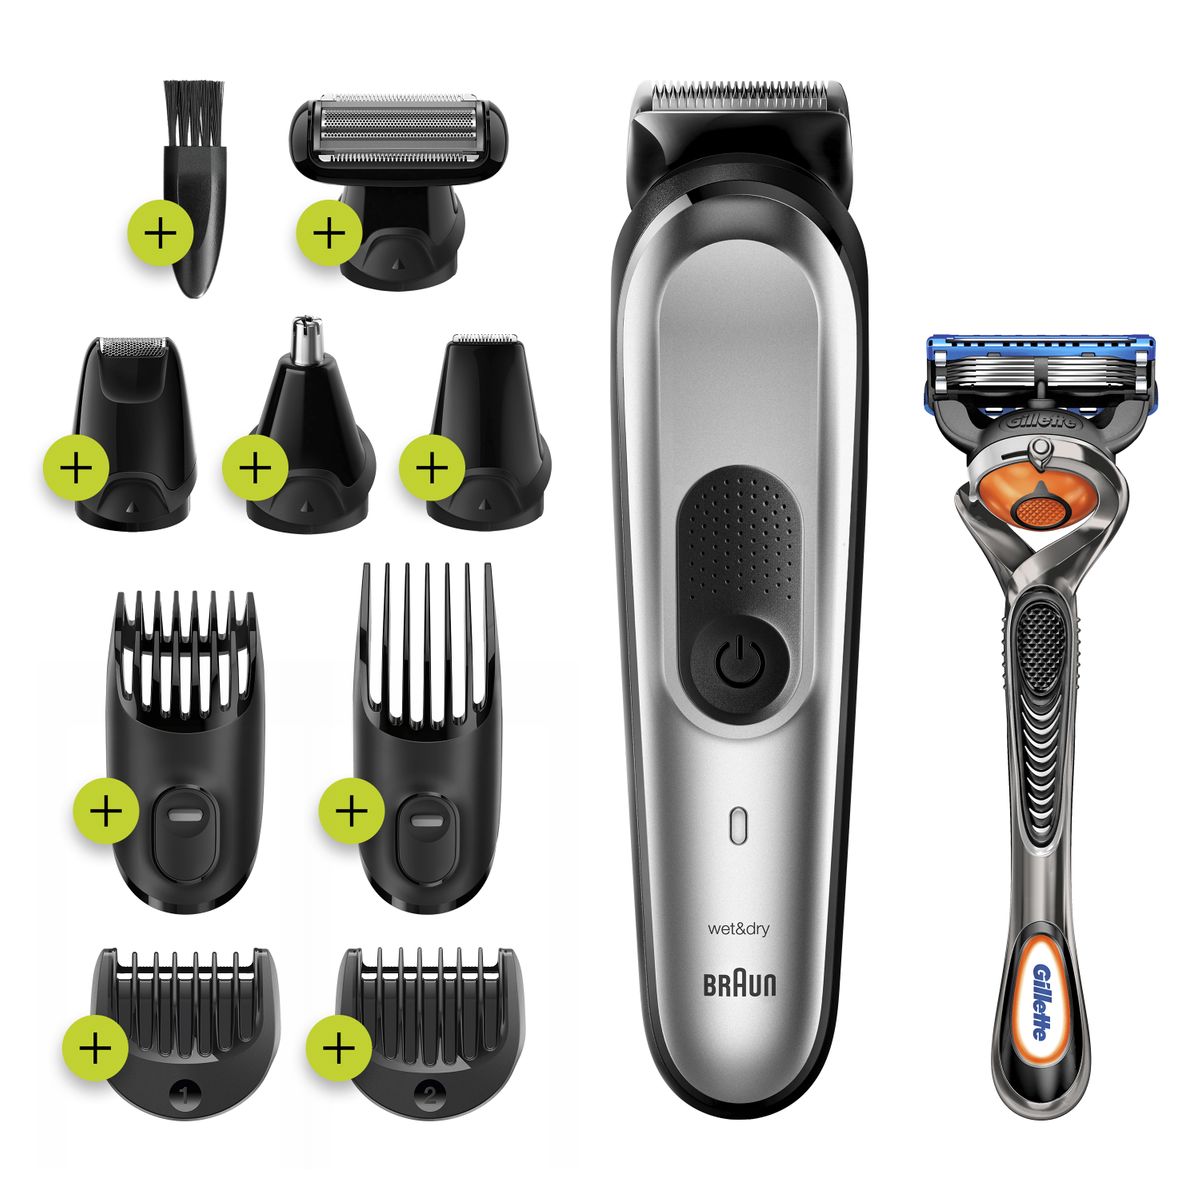 Braun beard trimmer/hair clipper men, trimmer/hair clipper & shaver, 10-in-1 set for beard, face, head, body, ears and nose, MGK7220, gray/silver MGK7220 Single